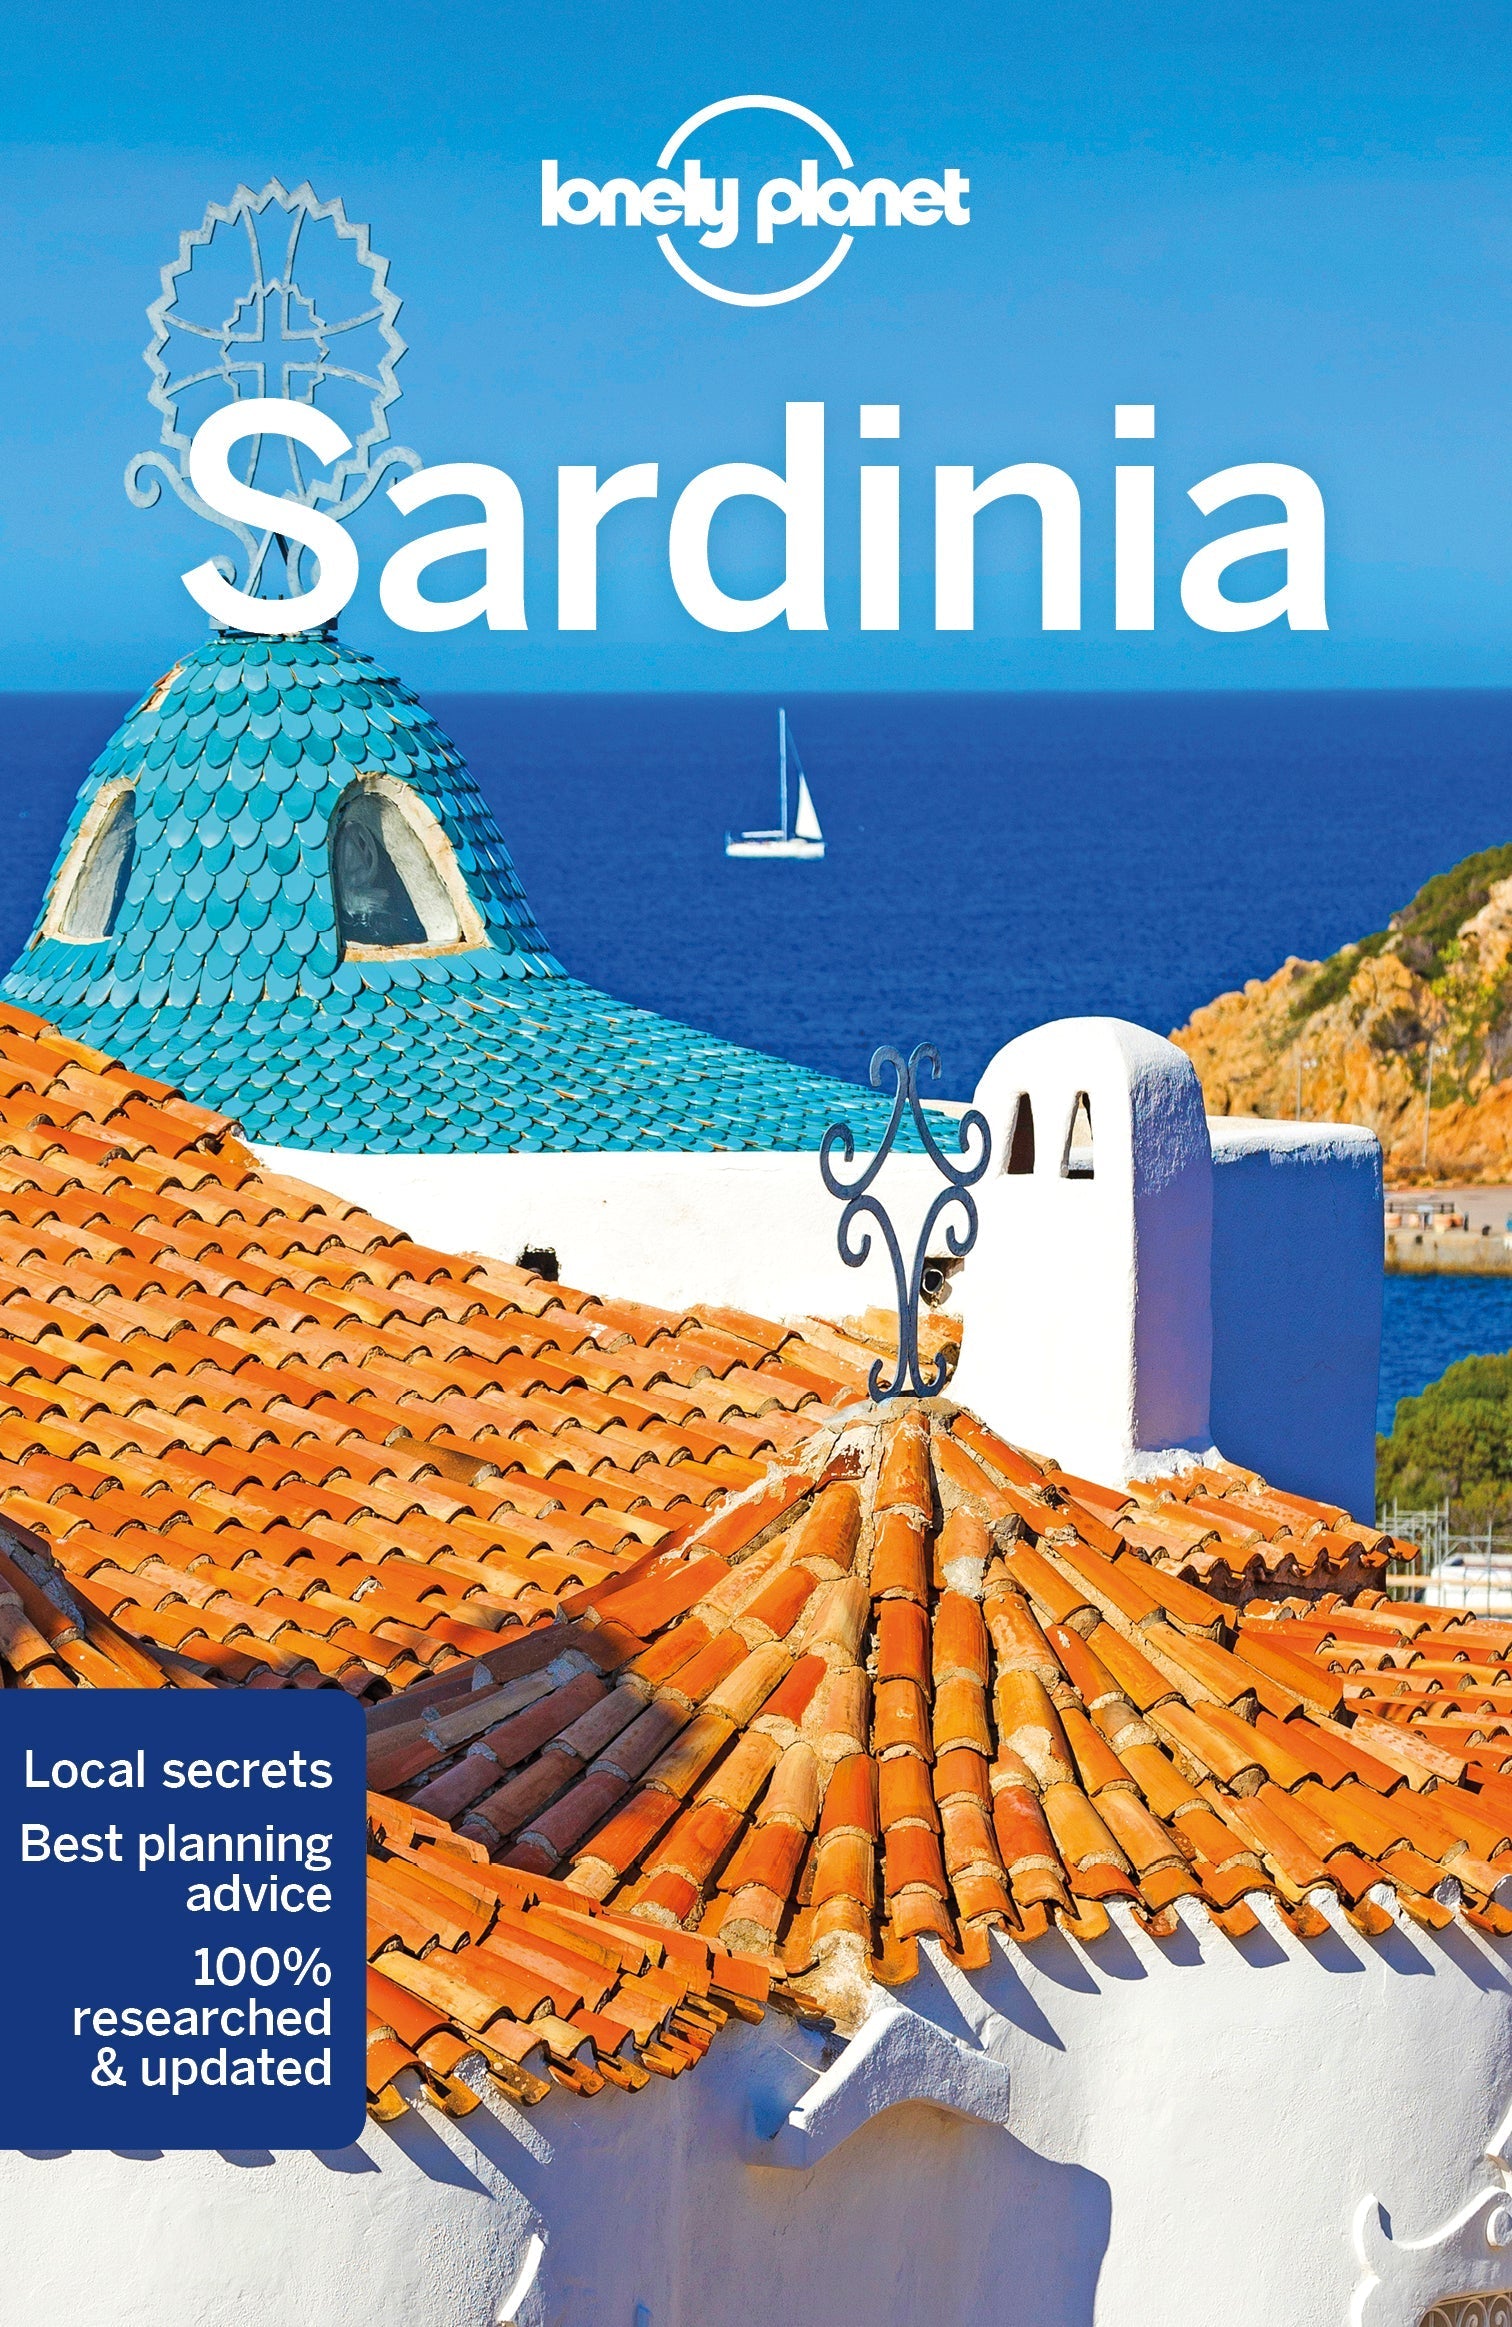 Sardinia preview